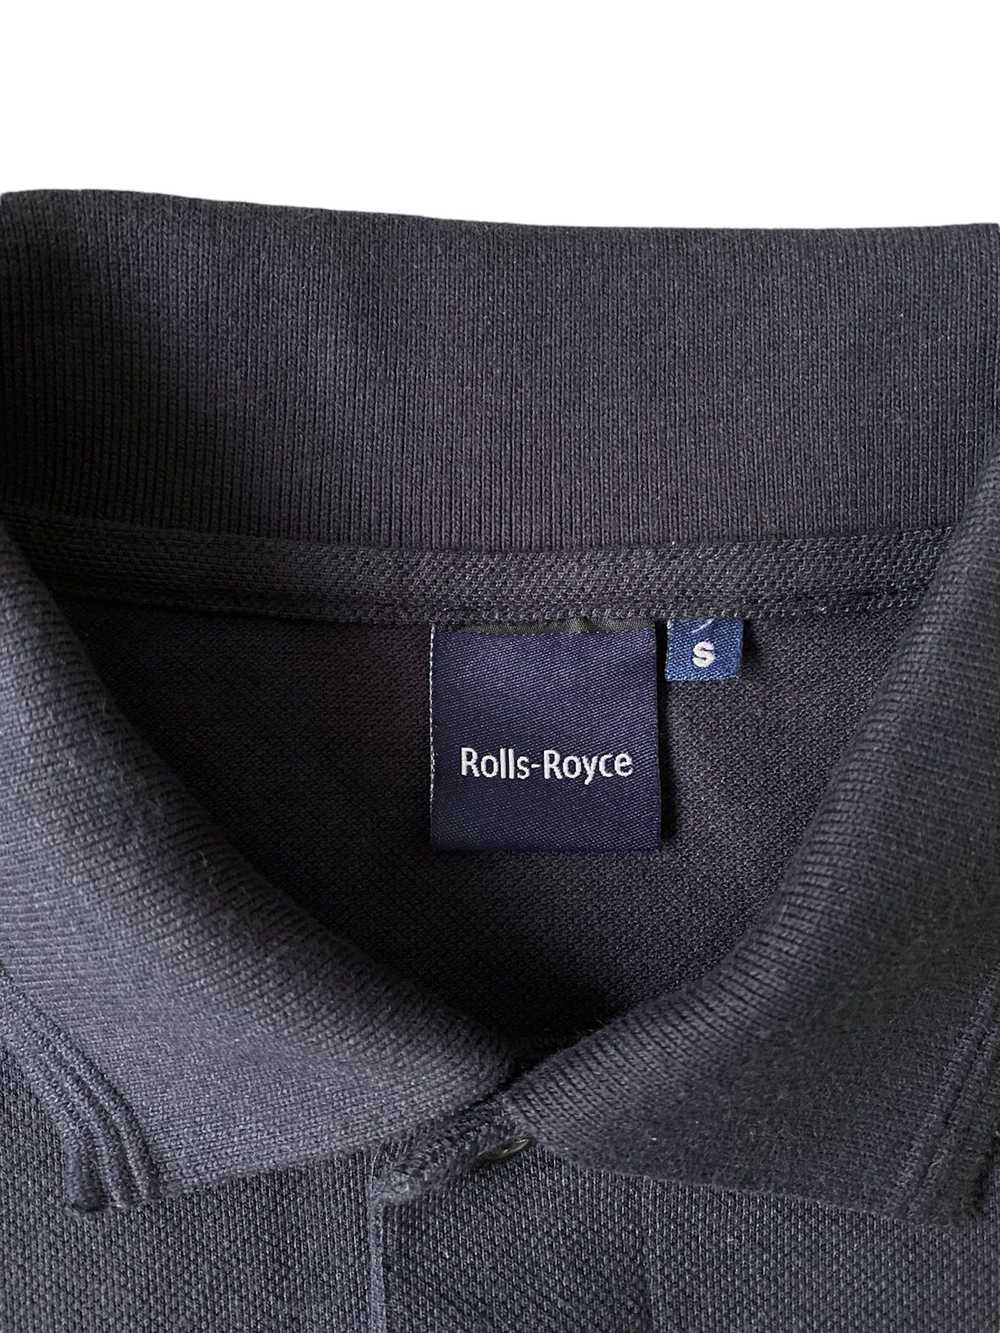 Vintage Rolls-Royce Vintage Polo Shirt - image 3